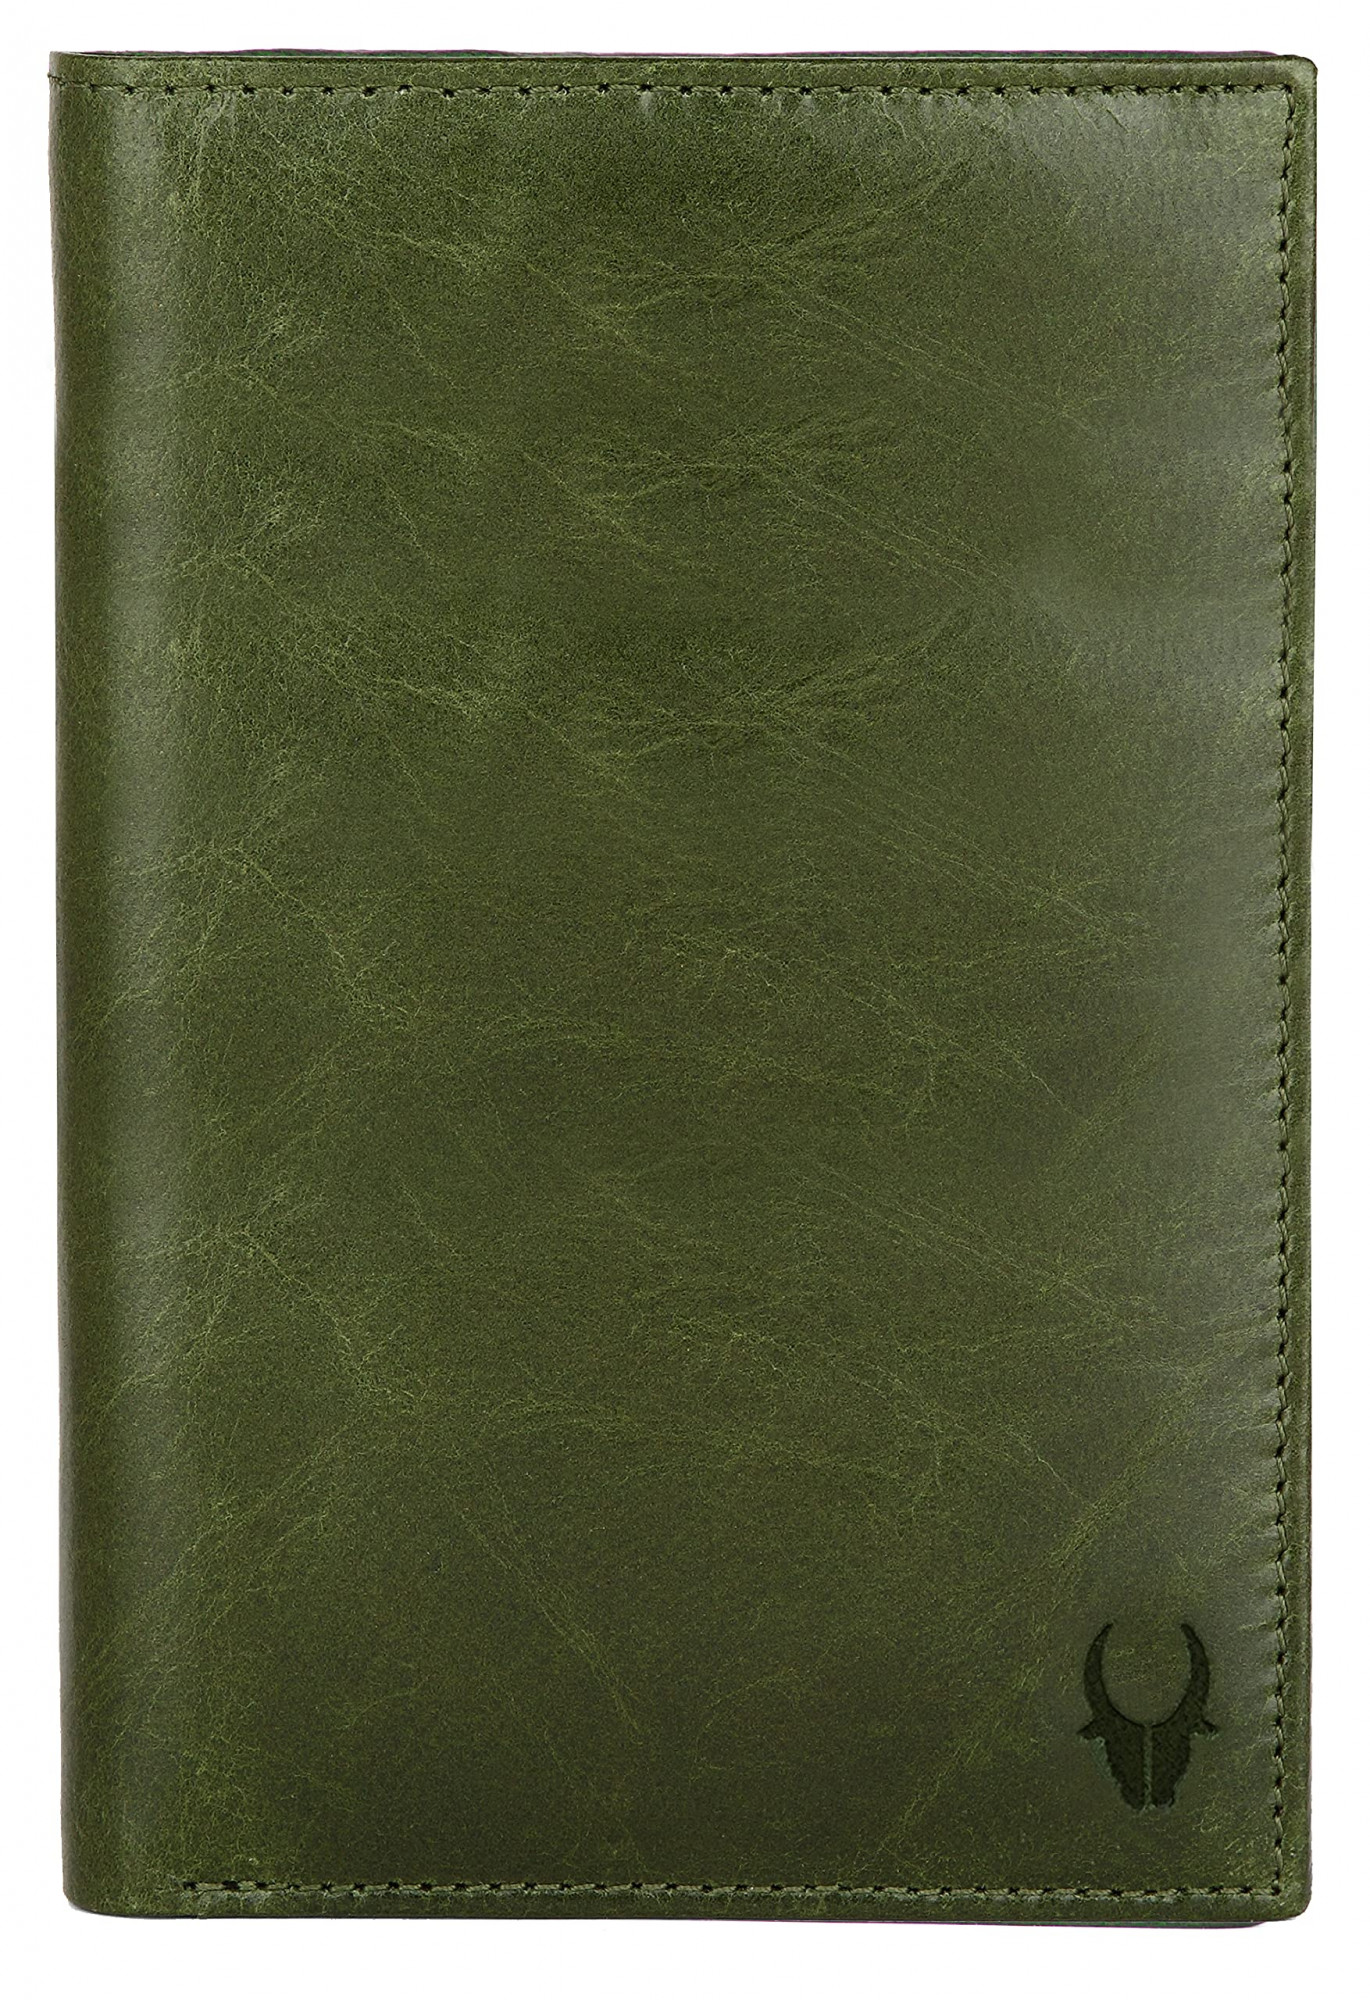 WildHorn Leather Passport Holder for Men & Women (Green)